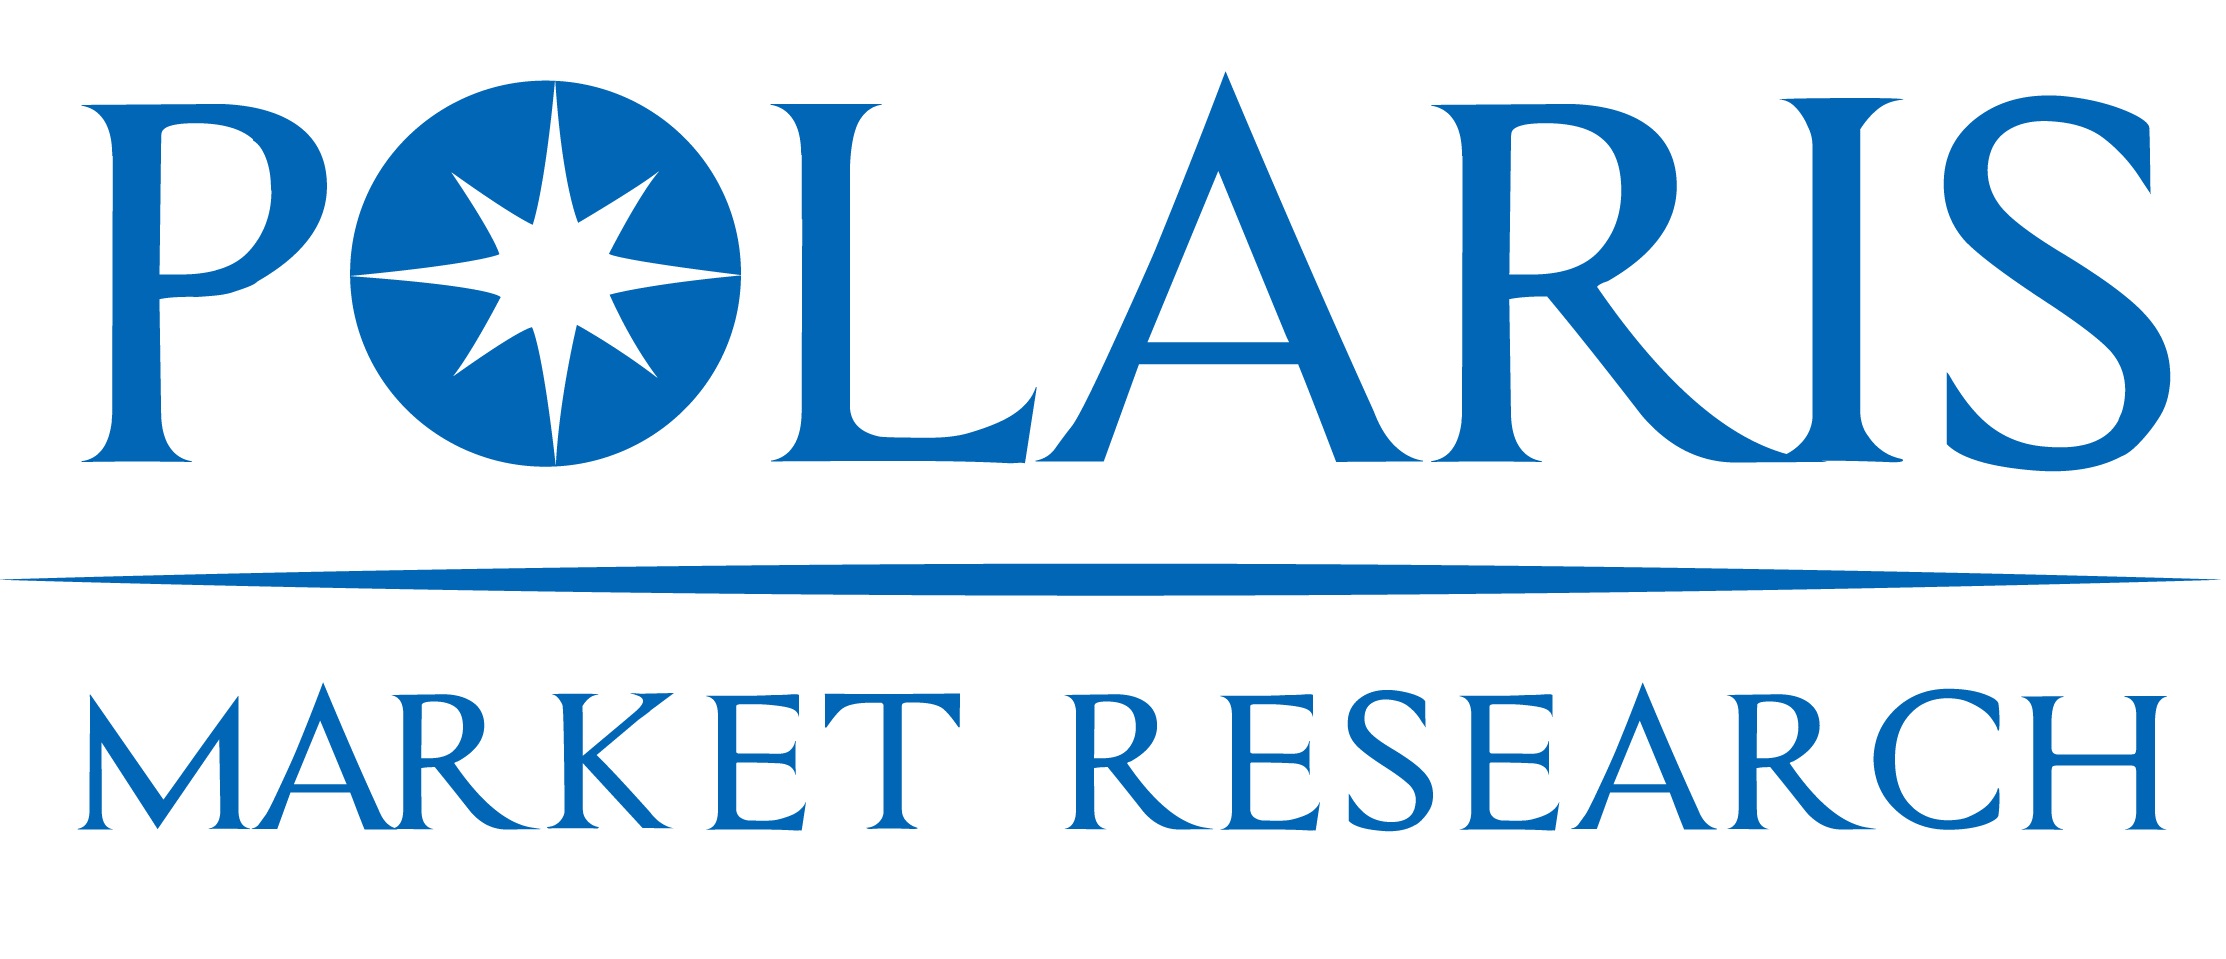 Bioanalytical Testing Services Market Size Worth $6.34 Billion By 2028 | CAGR: 8.7% : Polaris Market Research